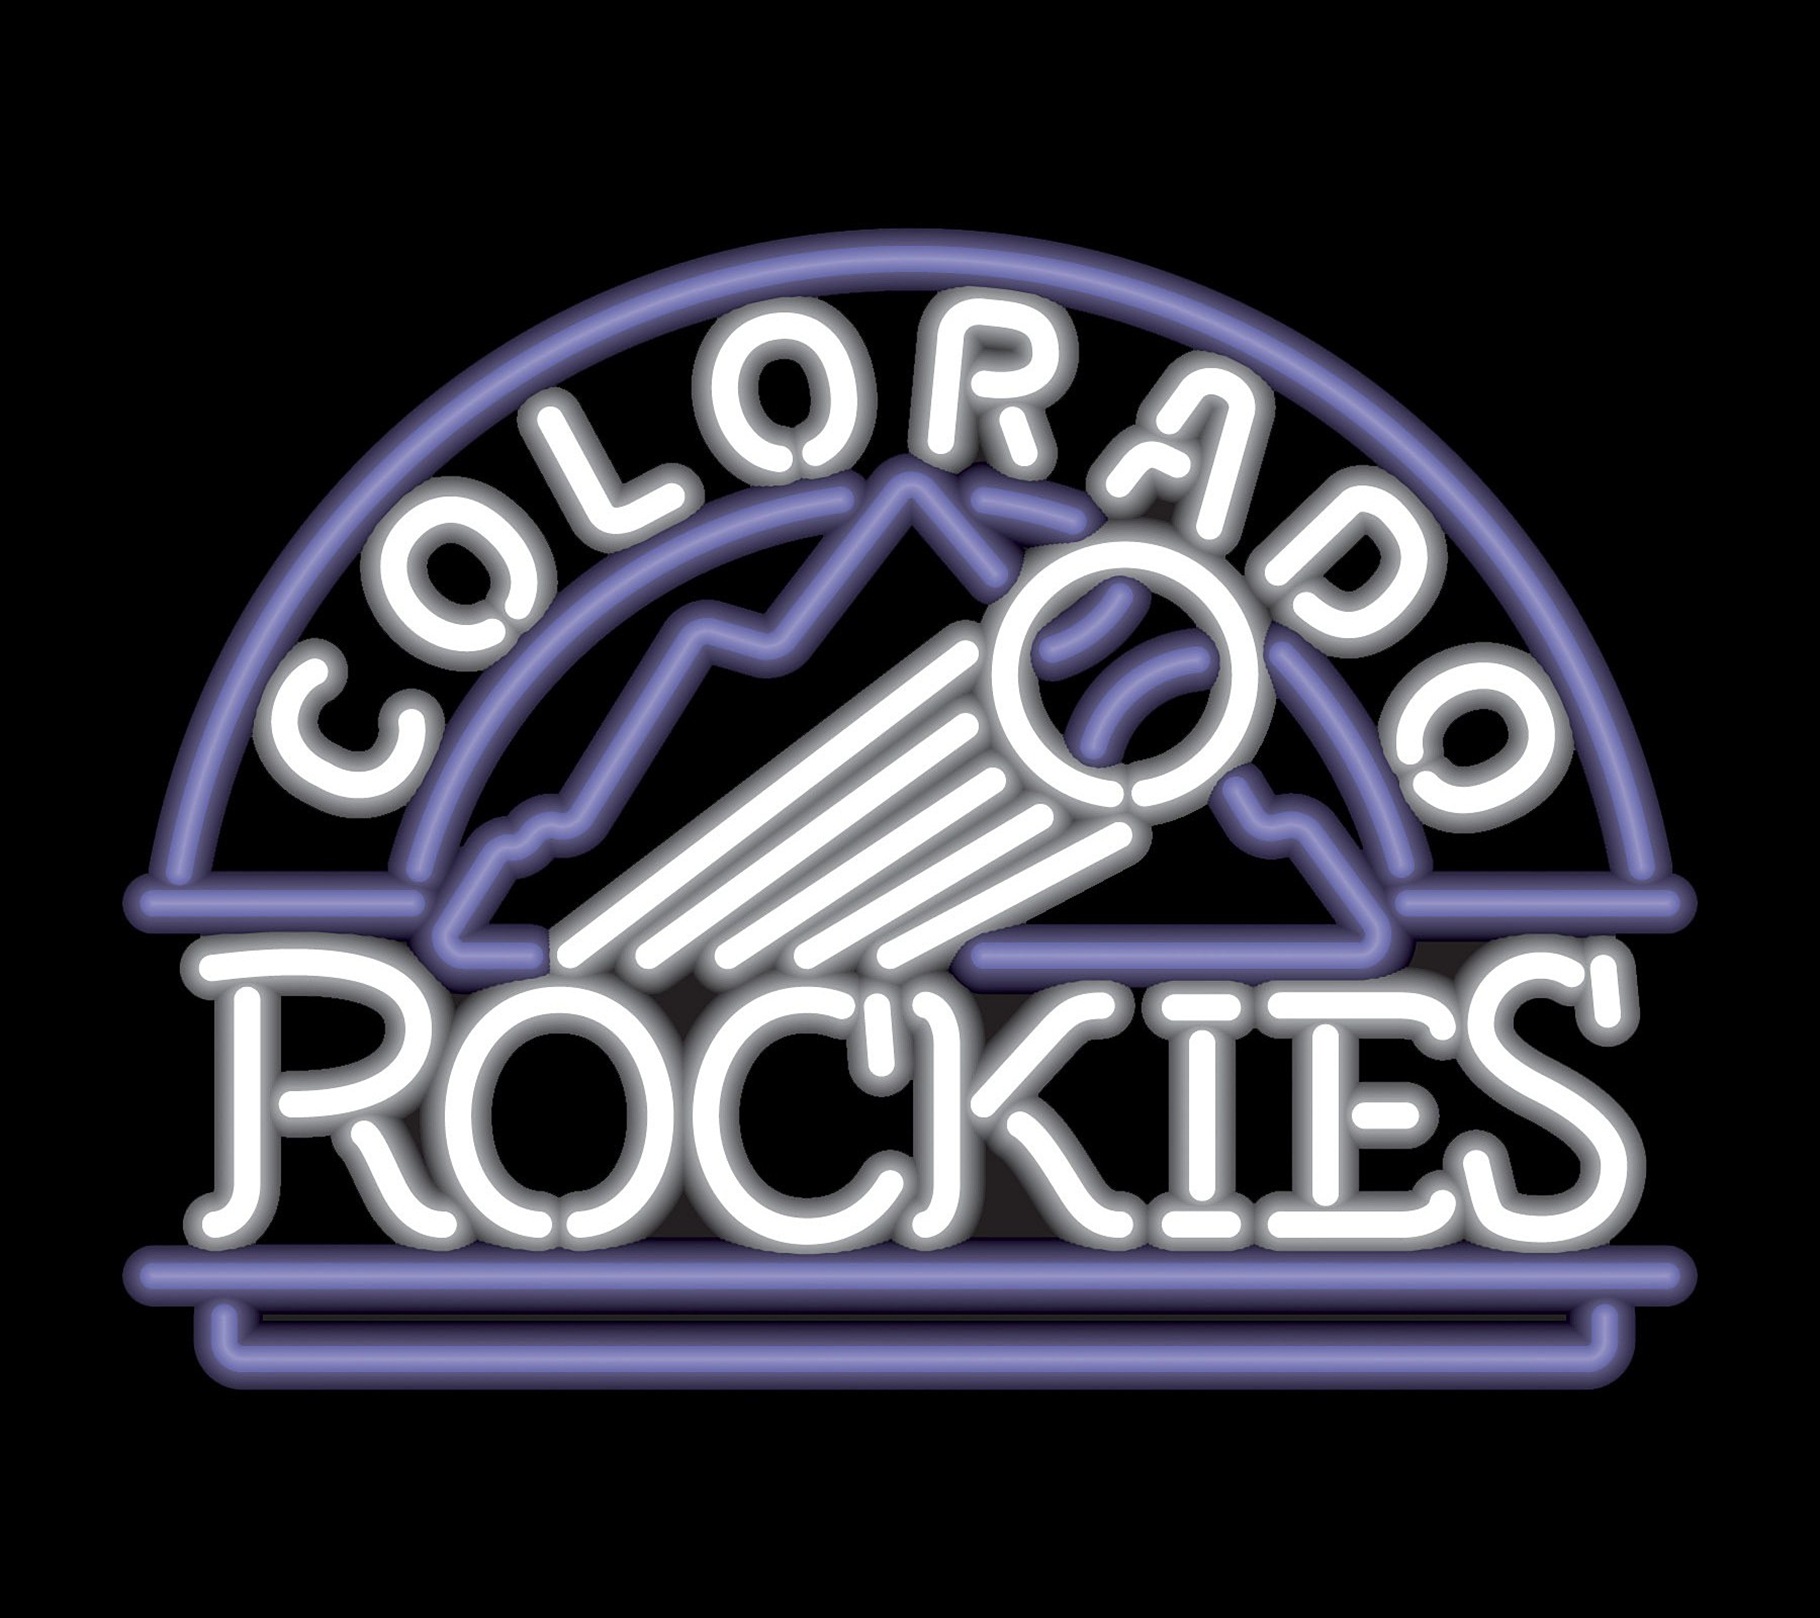 Colorado Rockies Baseball Mlb 38 Wallpapers Hd Desktop And Mobile Backgrounds